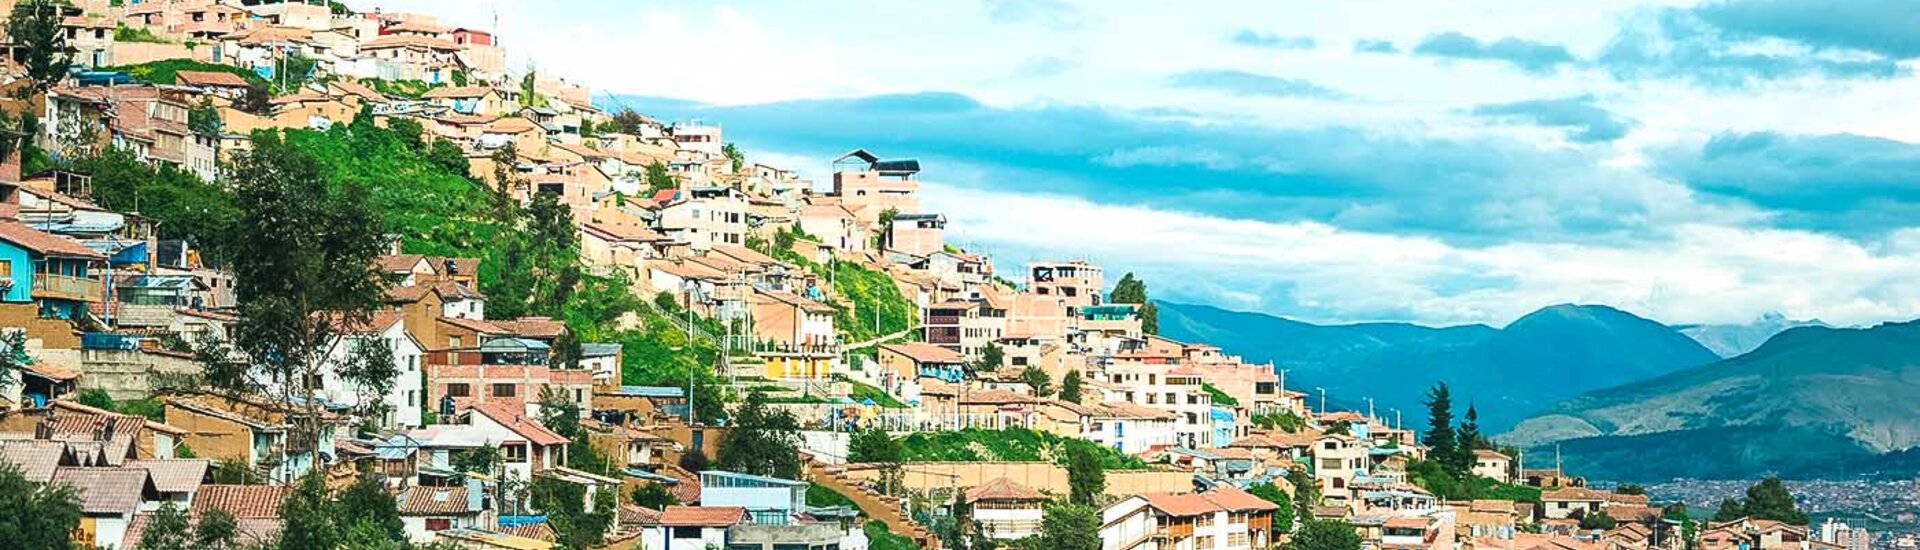 Die Stadt Cusco in Peru